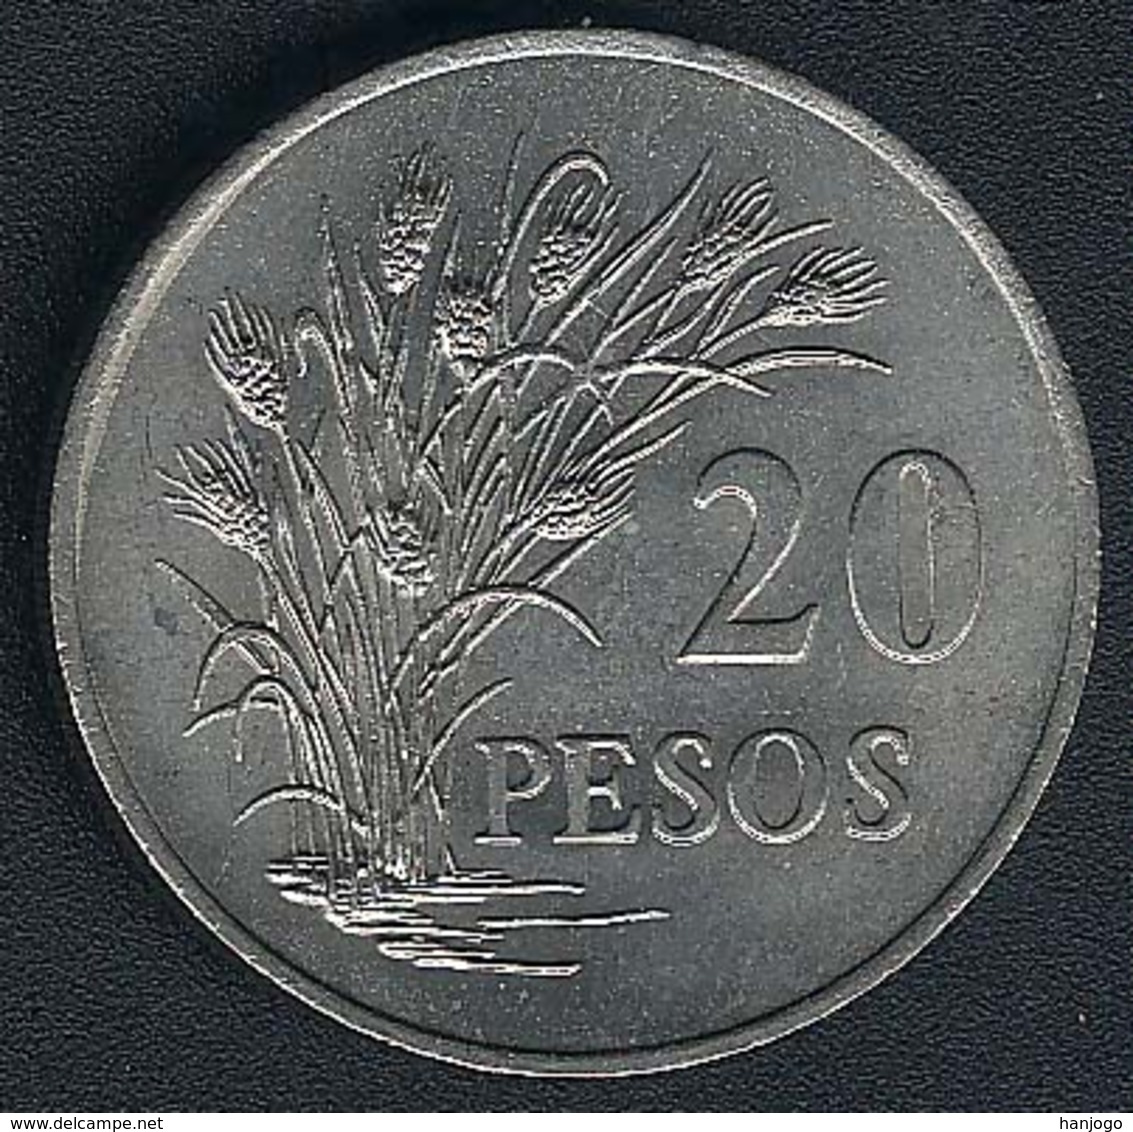 Guinea-Bissau, 20 Pesos 1977, UNC - Guinea-Bissau